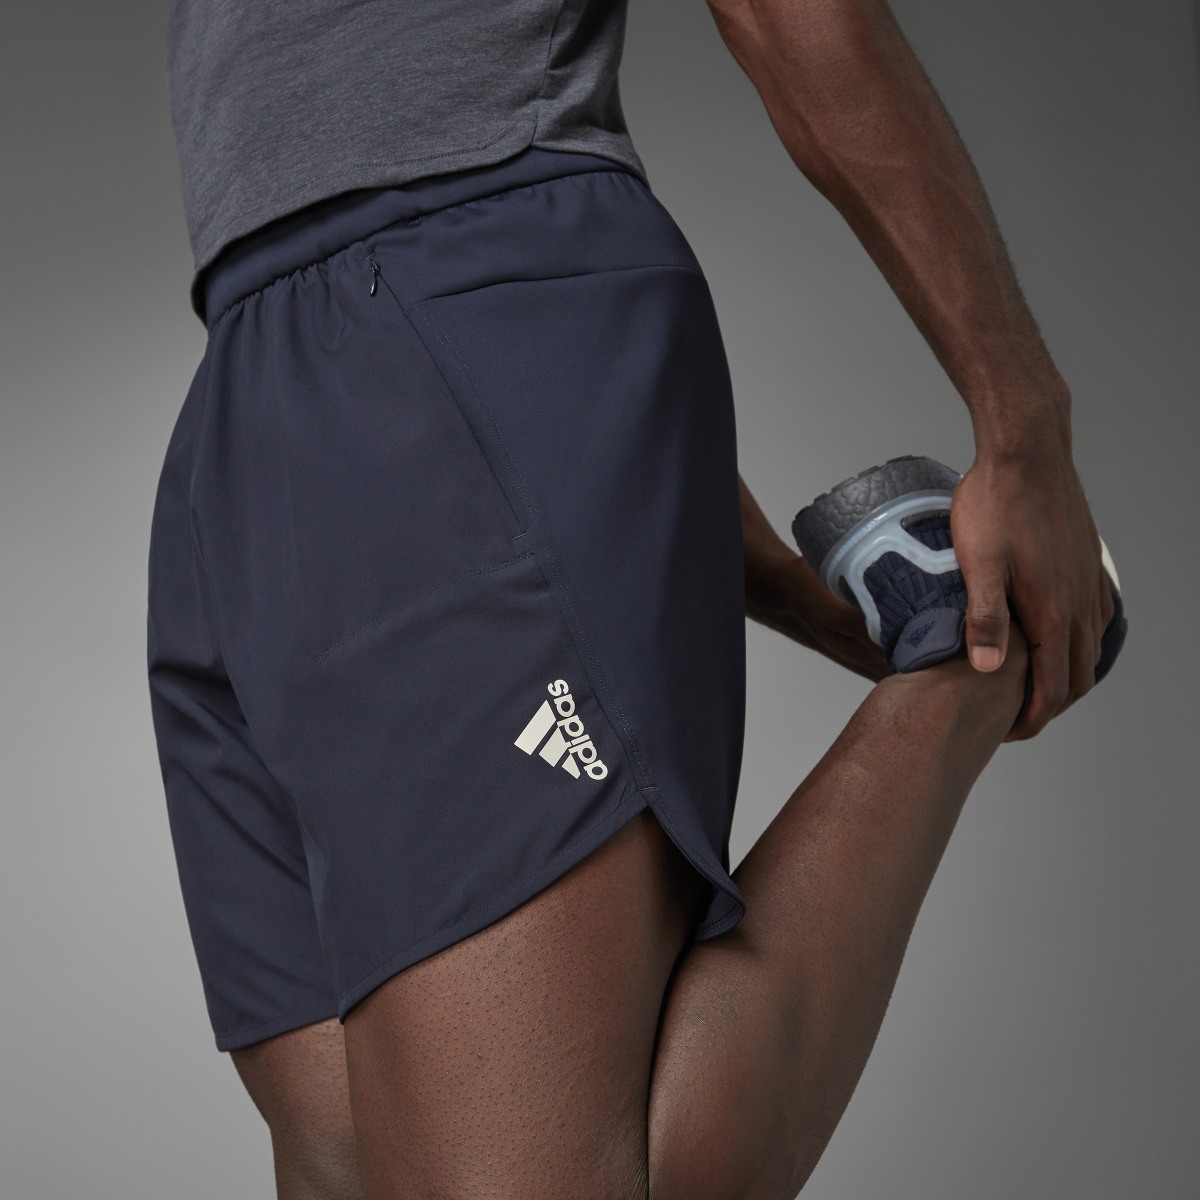 Adidas Short Designed for Training. 6